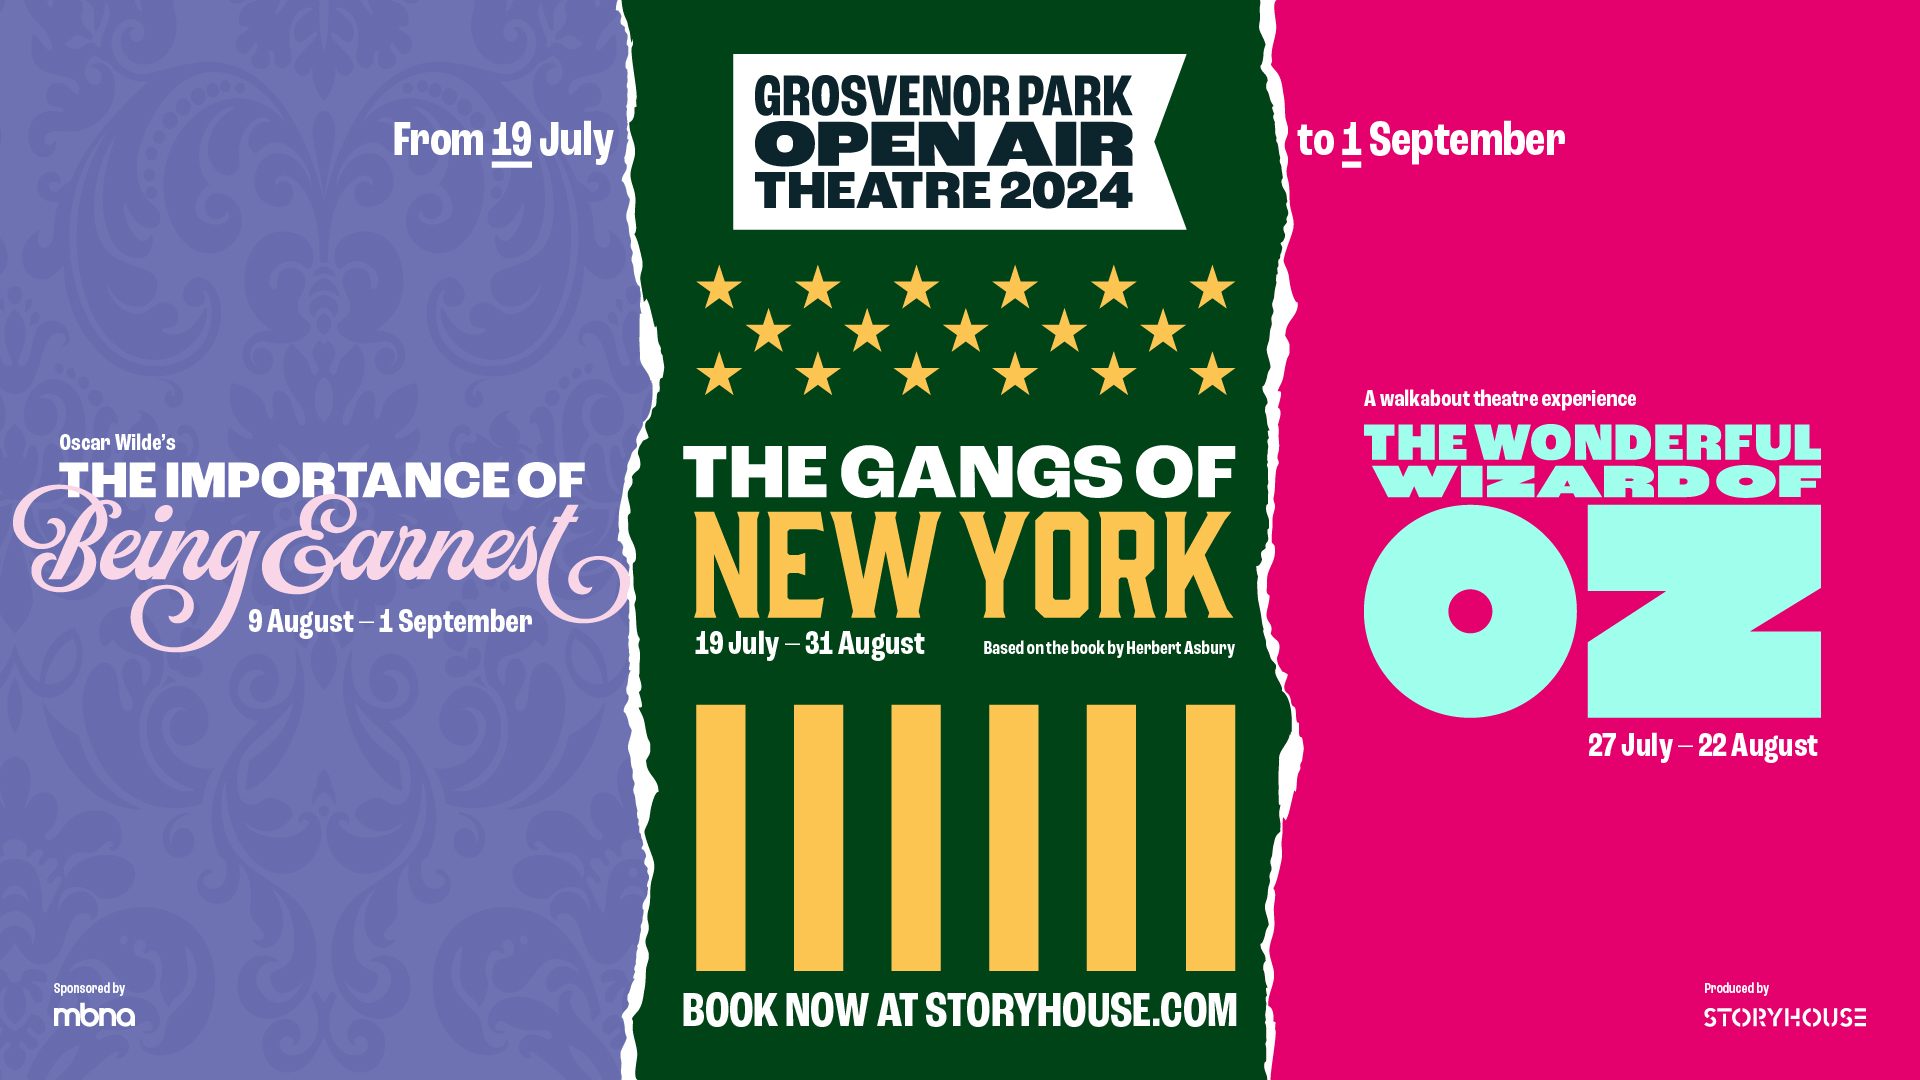 Grosvenor Park Open Air Theatre 2024 shows